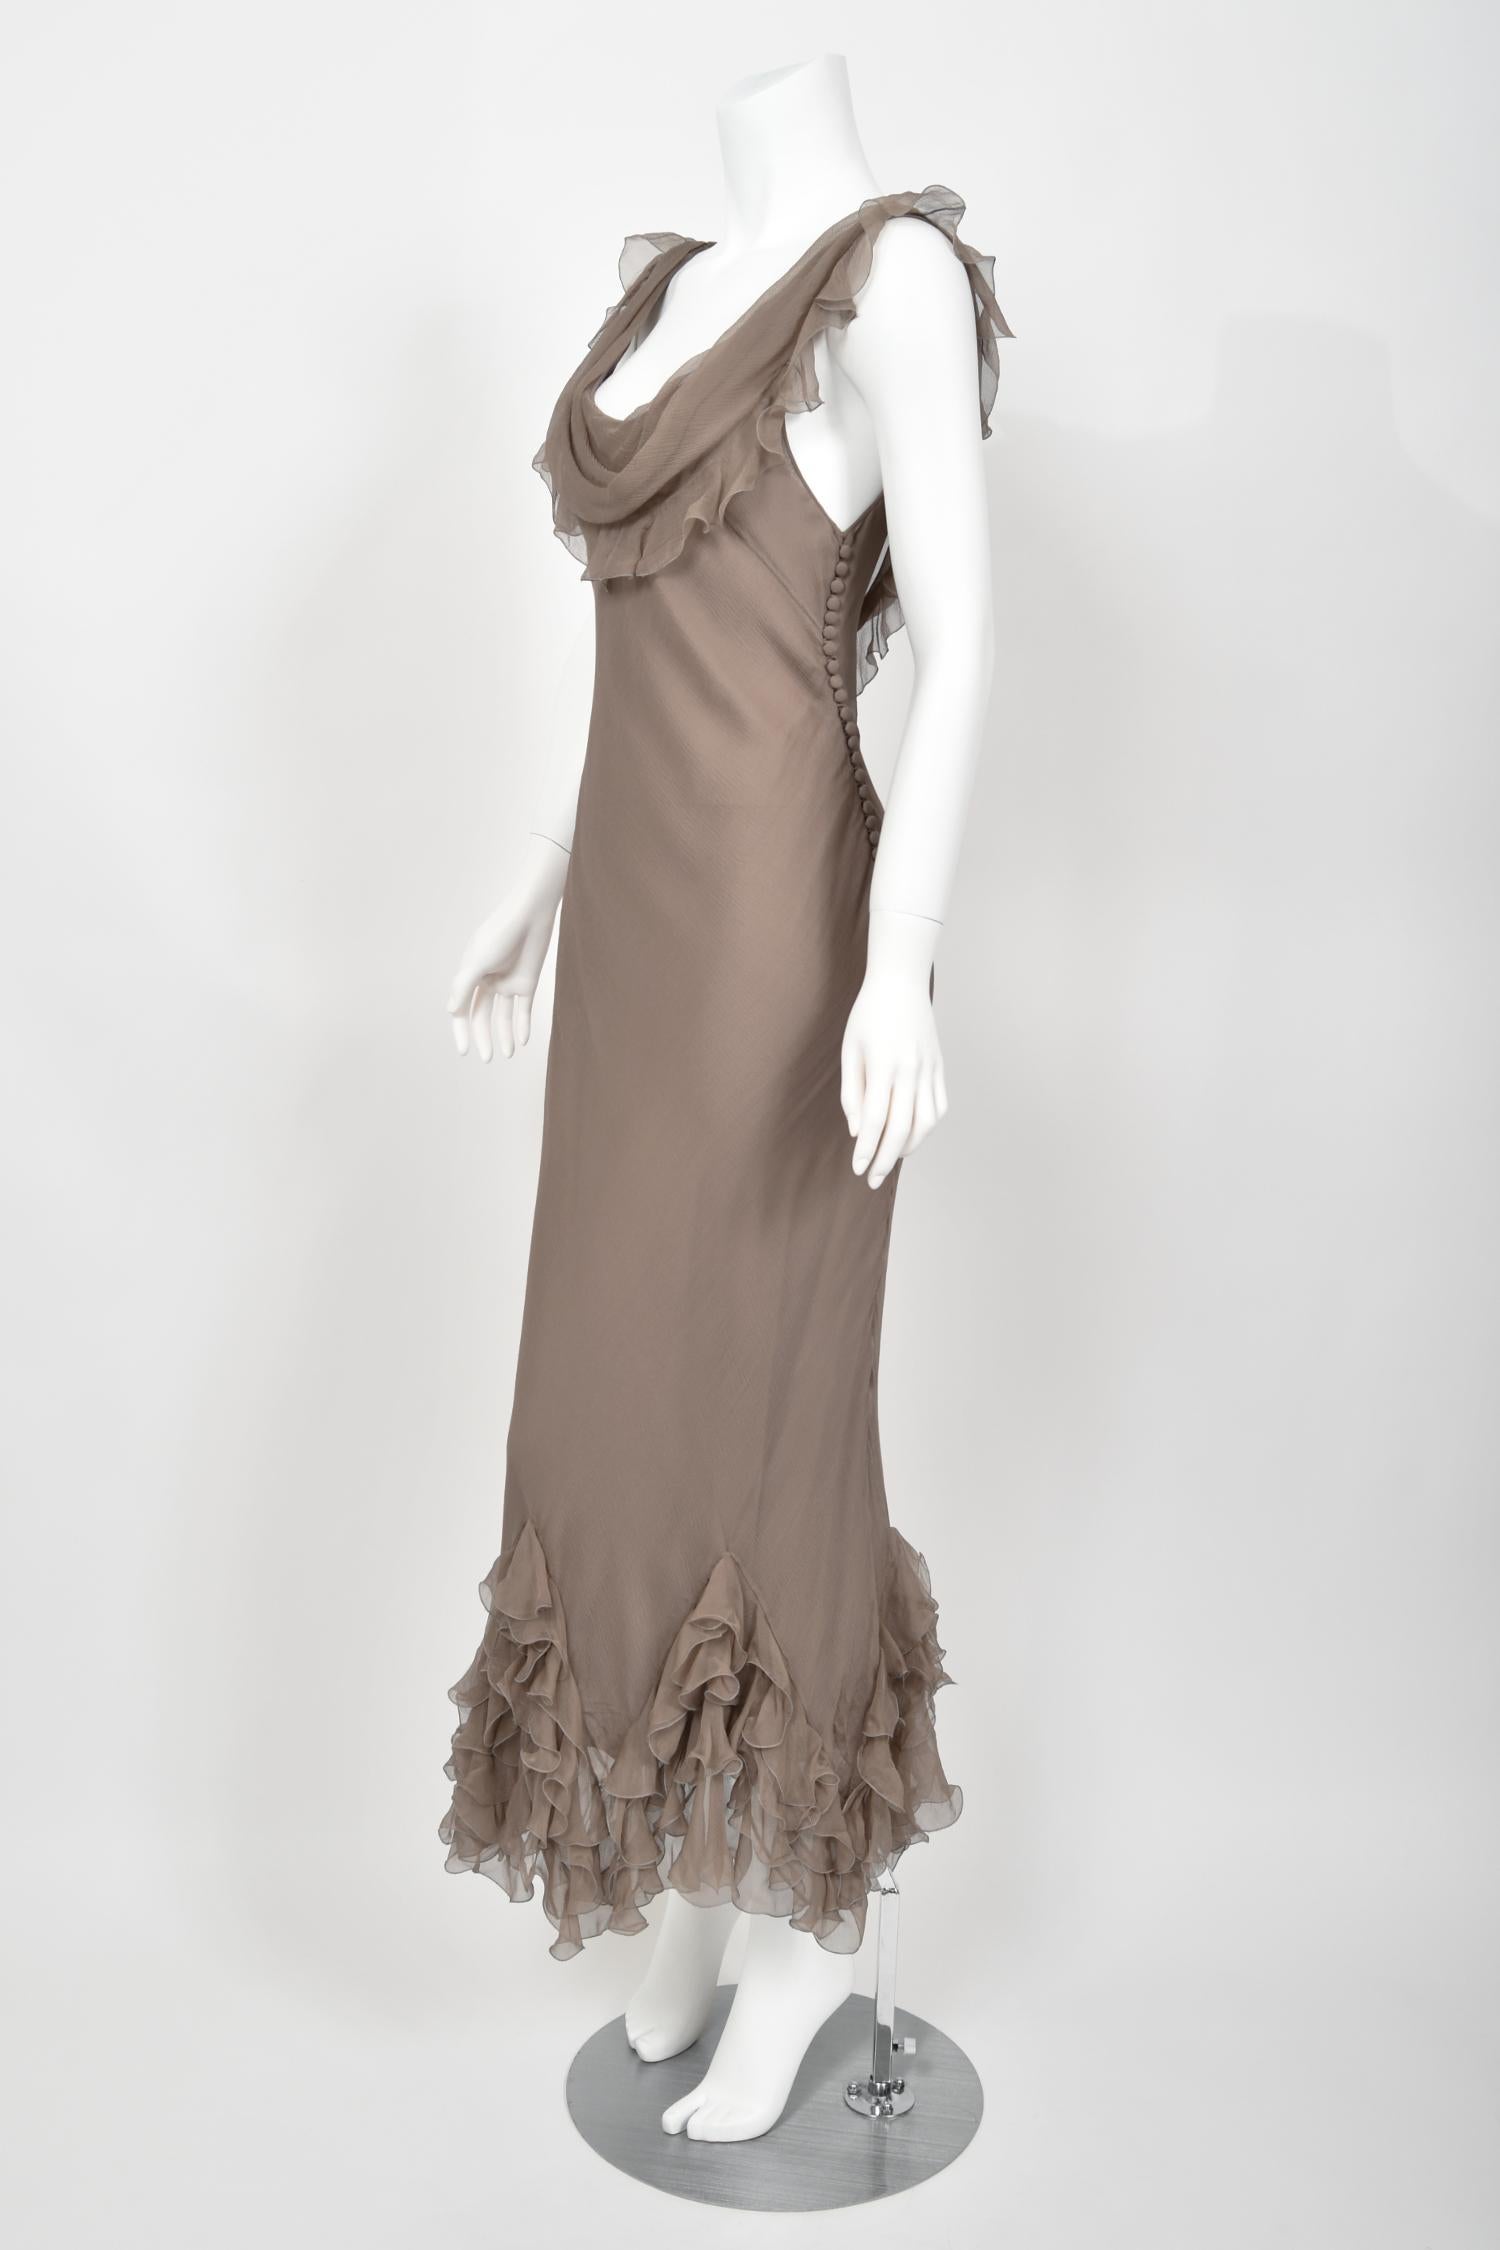 Women's 2006 Christian Dior by John Galliano Smoky Silk Tiered Ruffle Bias-Cut Gown For Sale